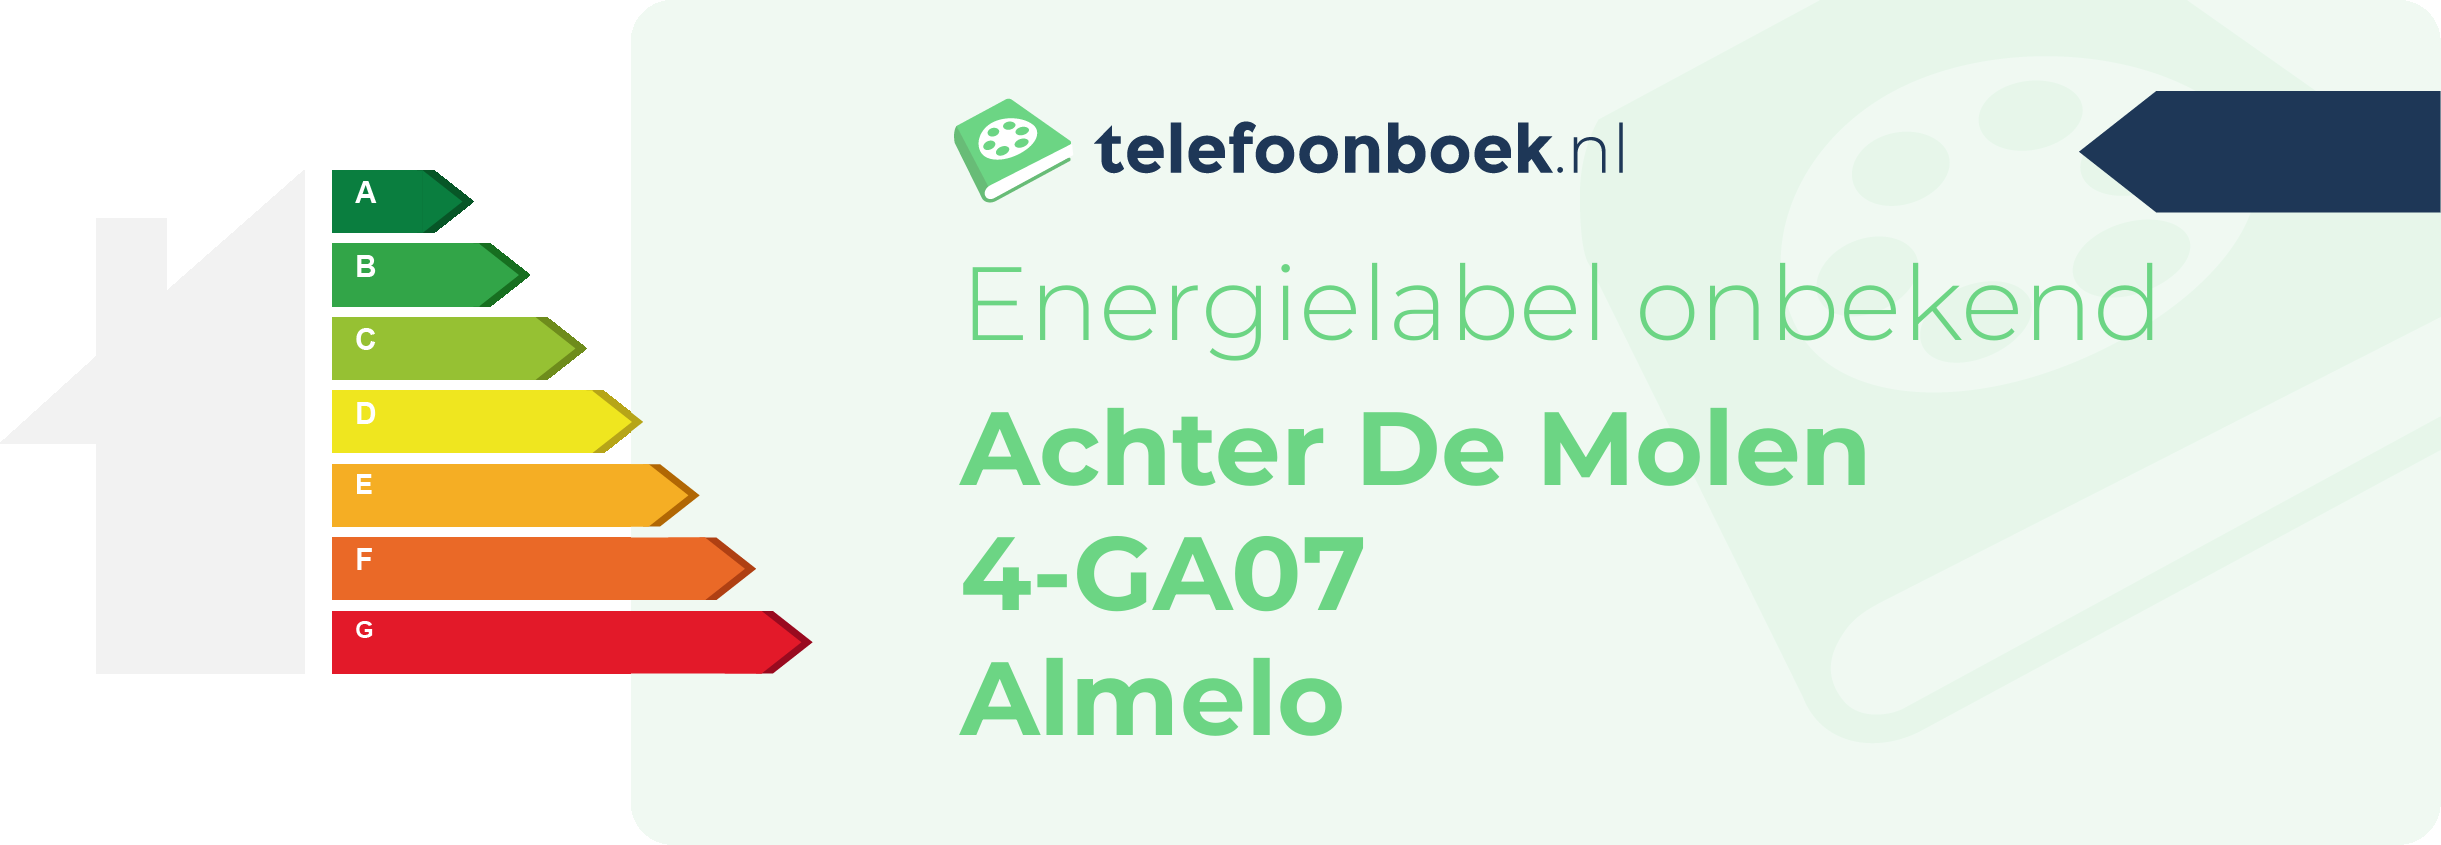 Energielabel Achter De Molen 4-GA07 Almelo